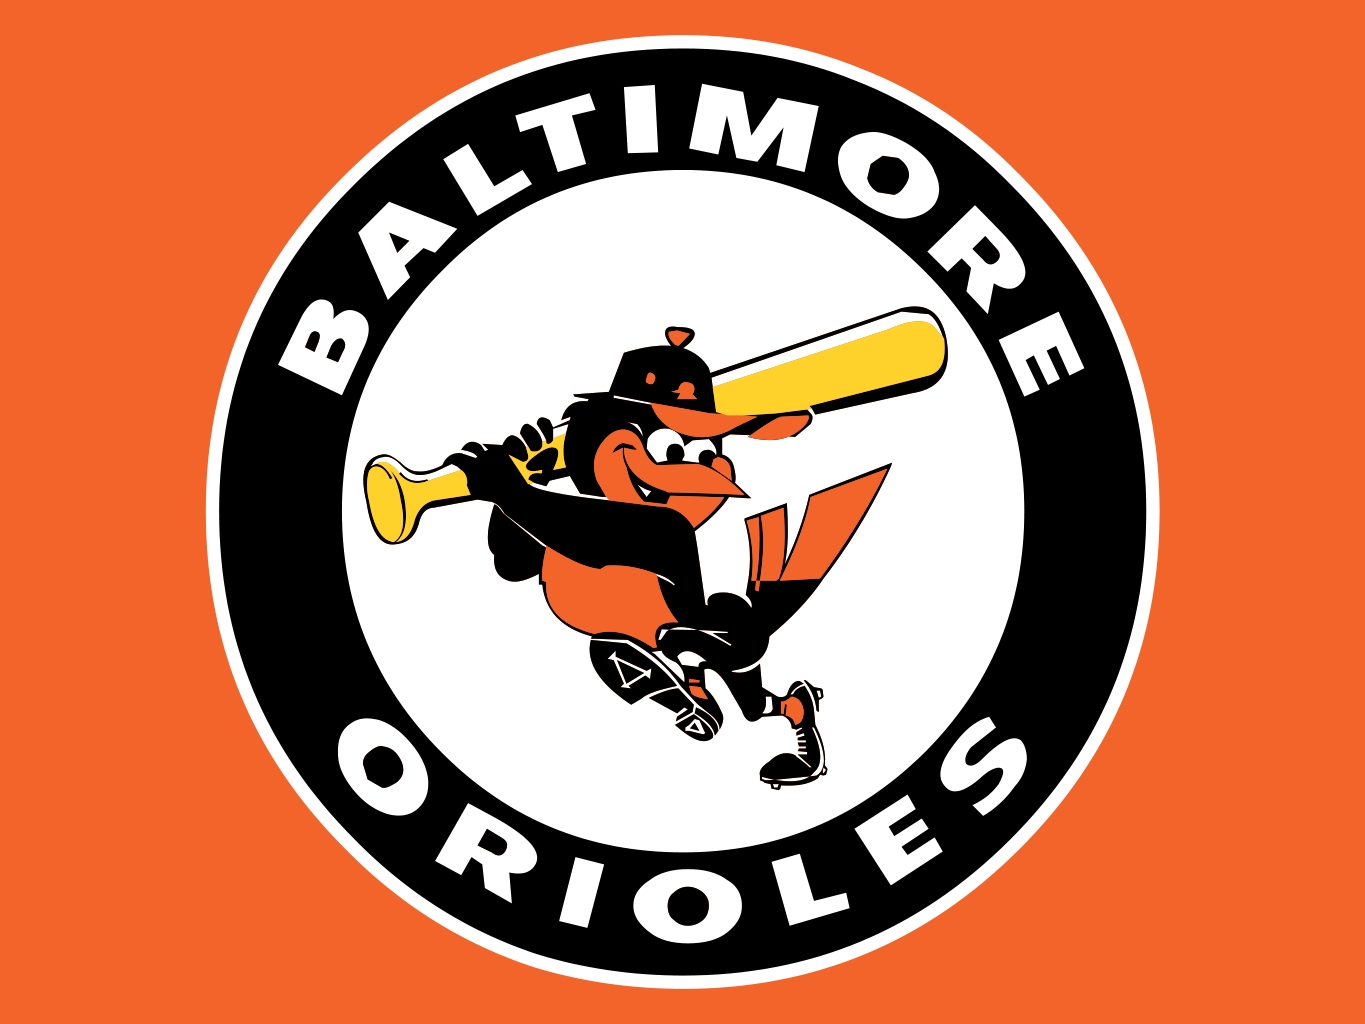 Baltimore Orioles Tickets